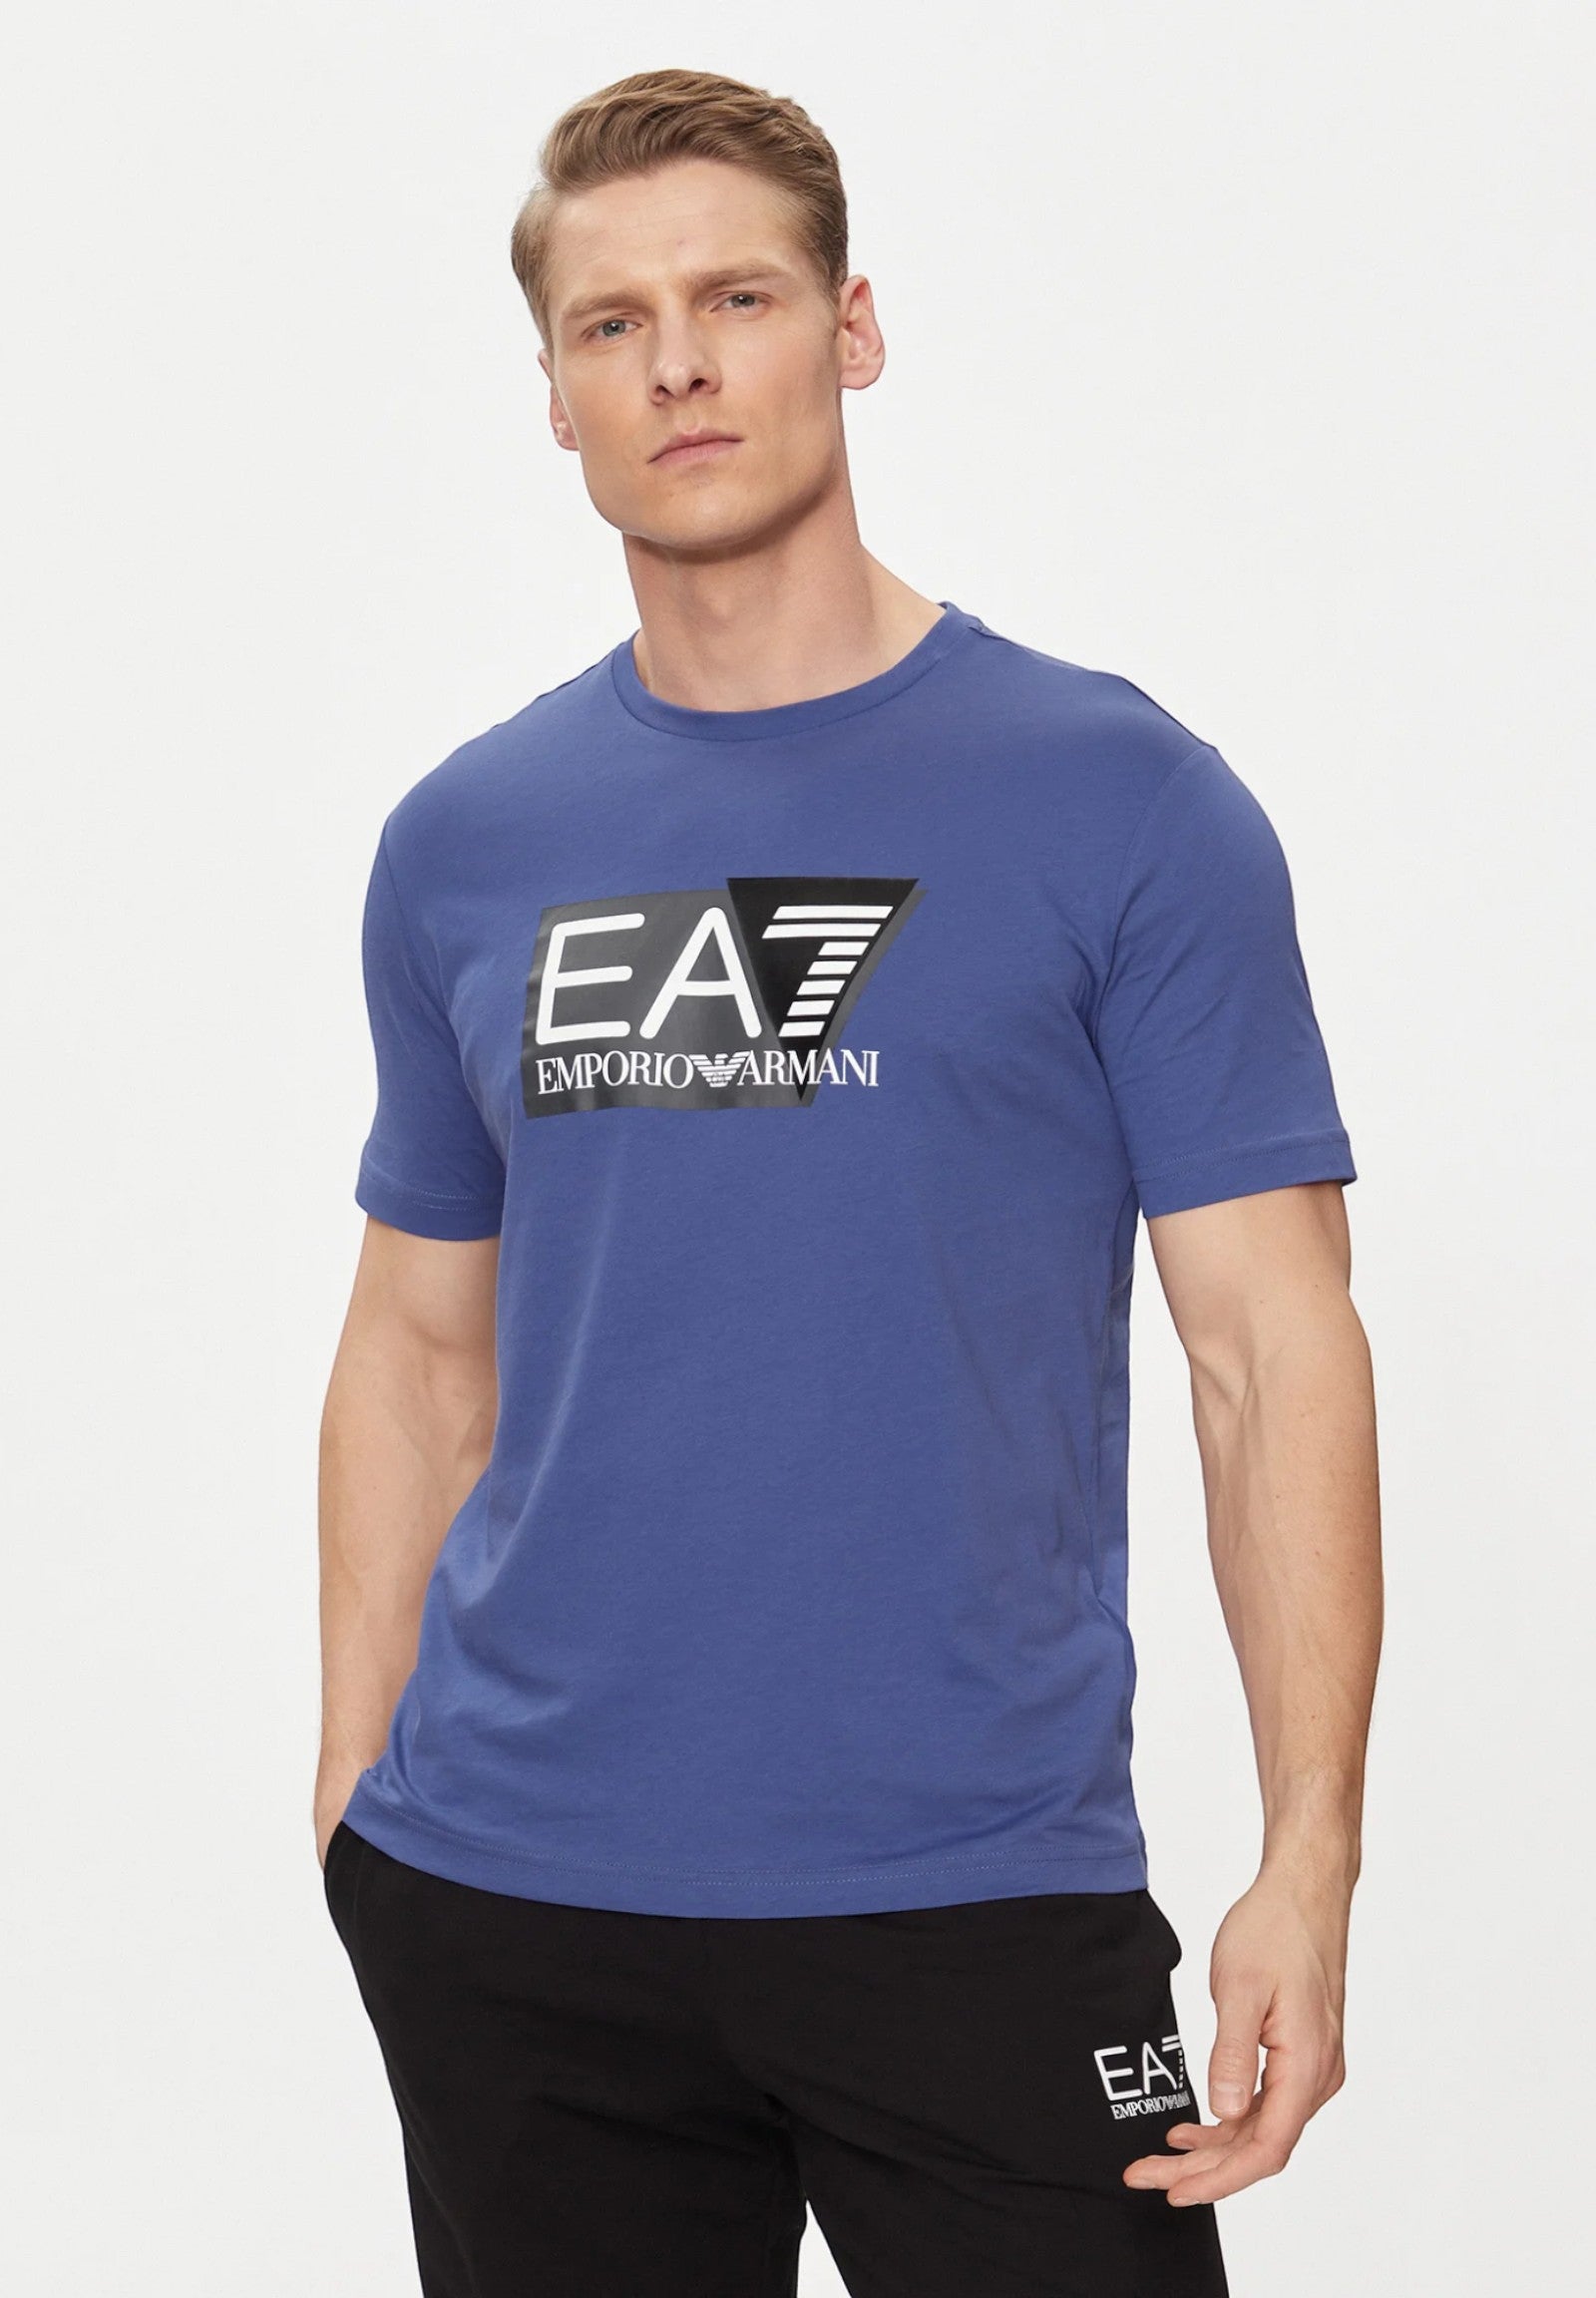 Ea7 Emporio Armani T-Shirt* 3dpt81 Marlin